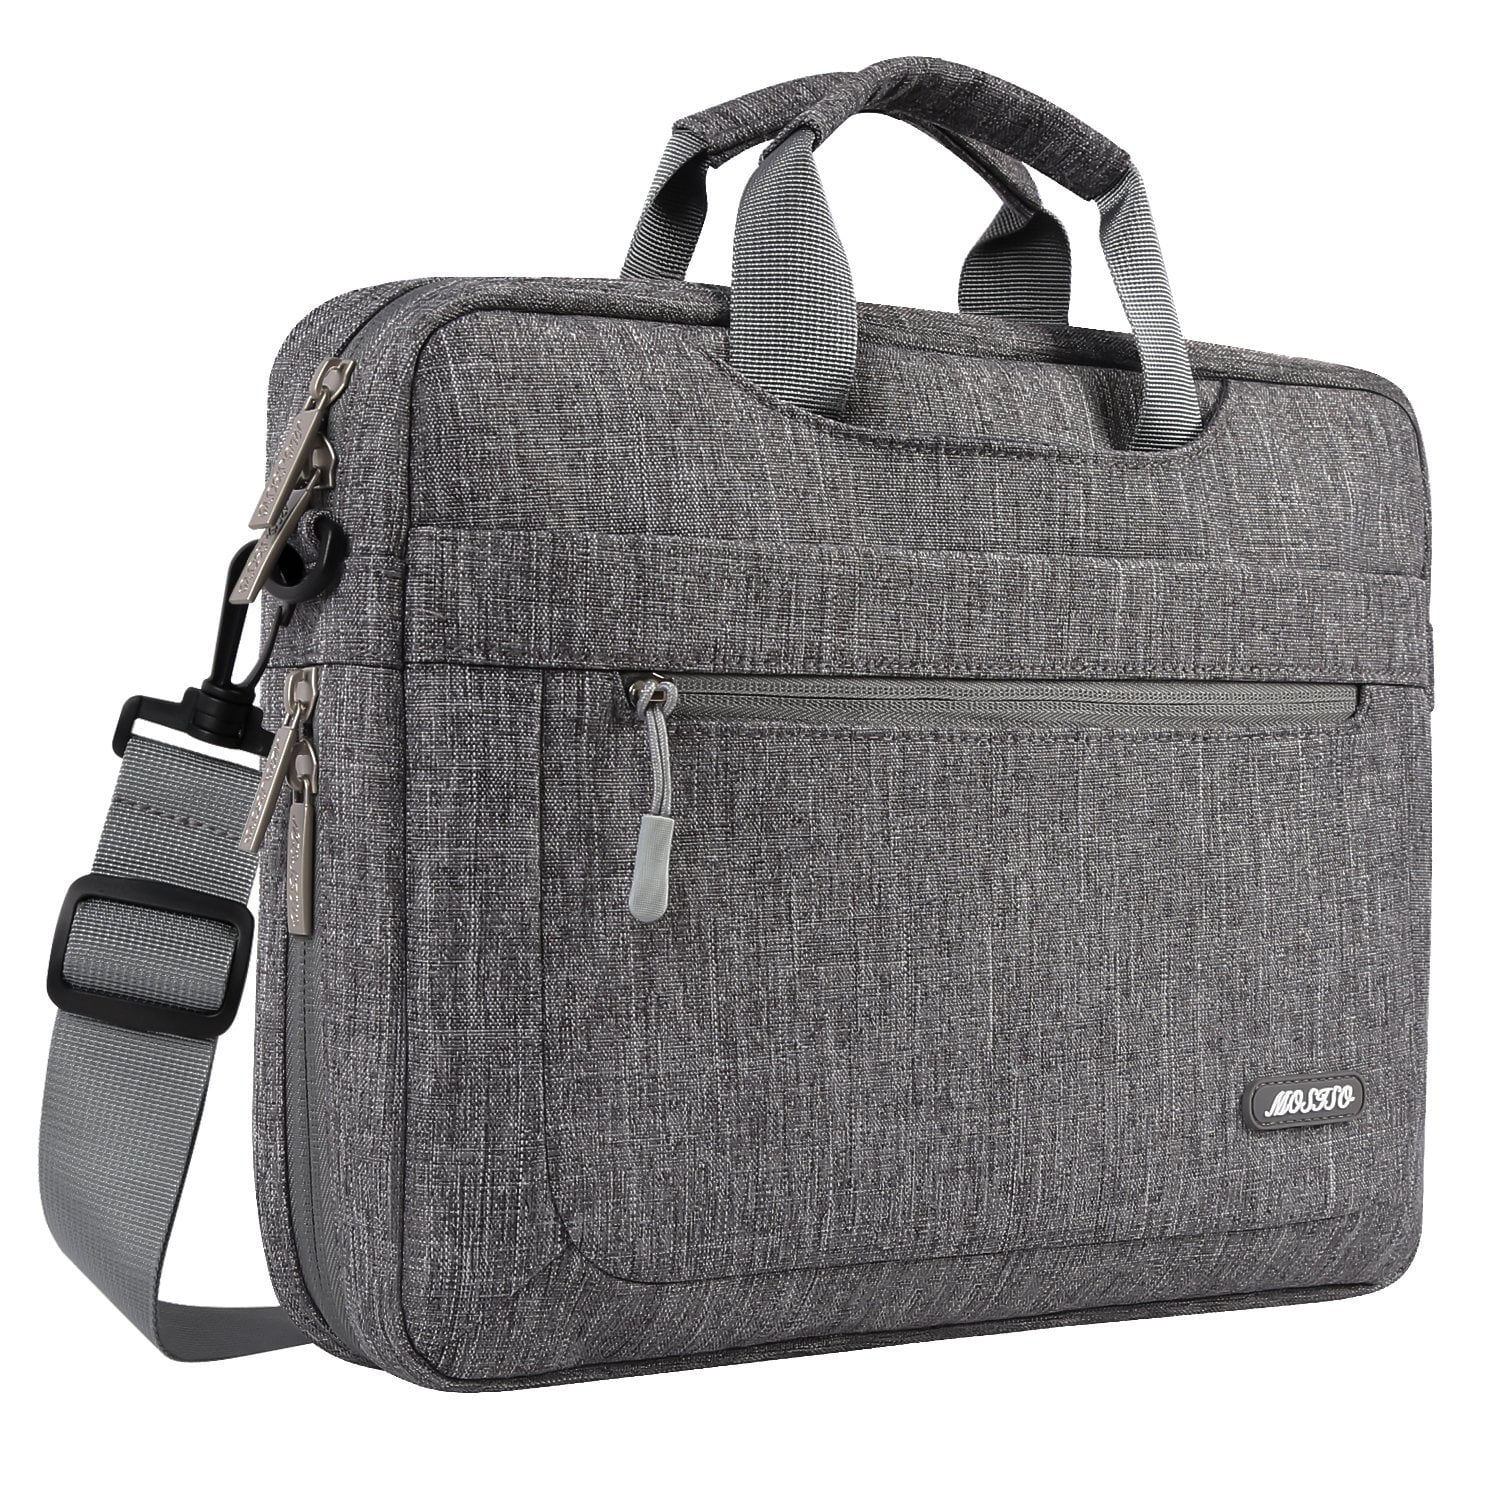 Boyd Aviation Classic Laptop Bag-Messenger Shoulder Bag Notebook Bag Compatible with 13 Inch MacBook Pro MacBook Air Lenovo Acer Asus Dell Lenovo Hp Samsung